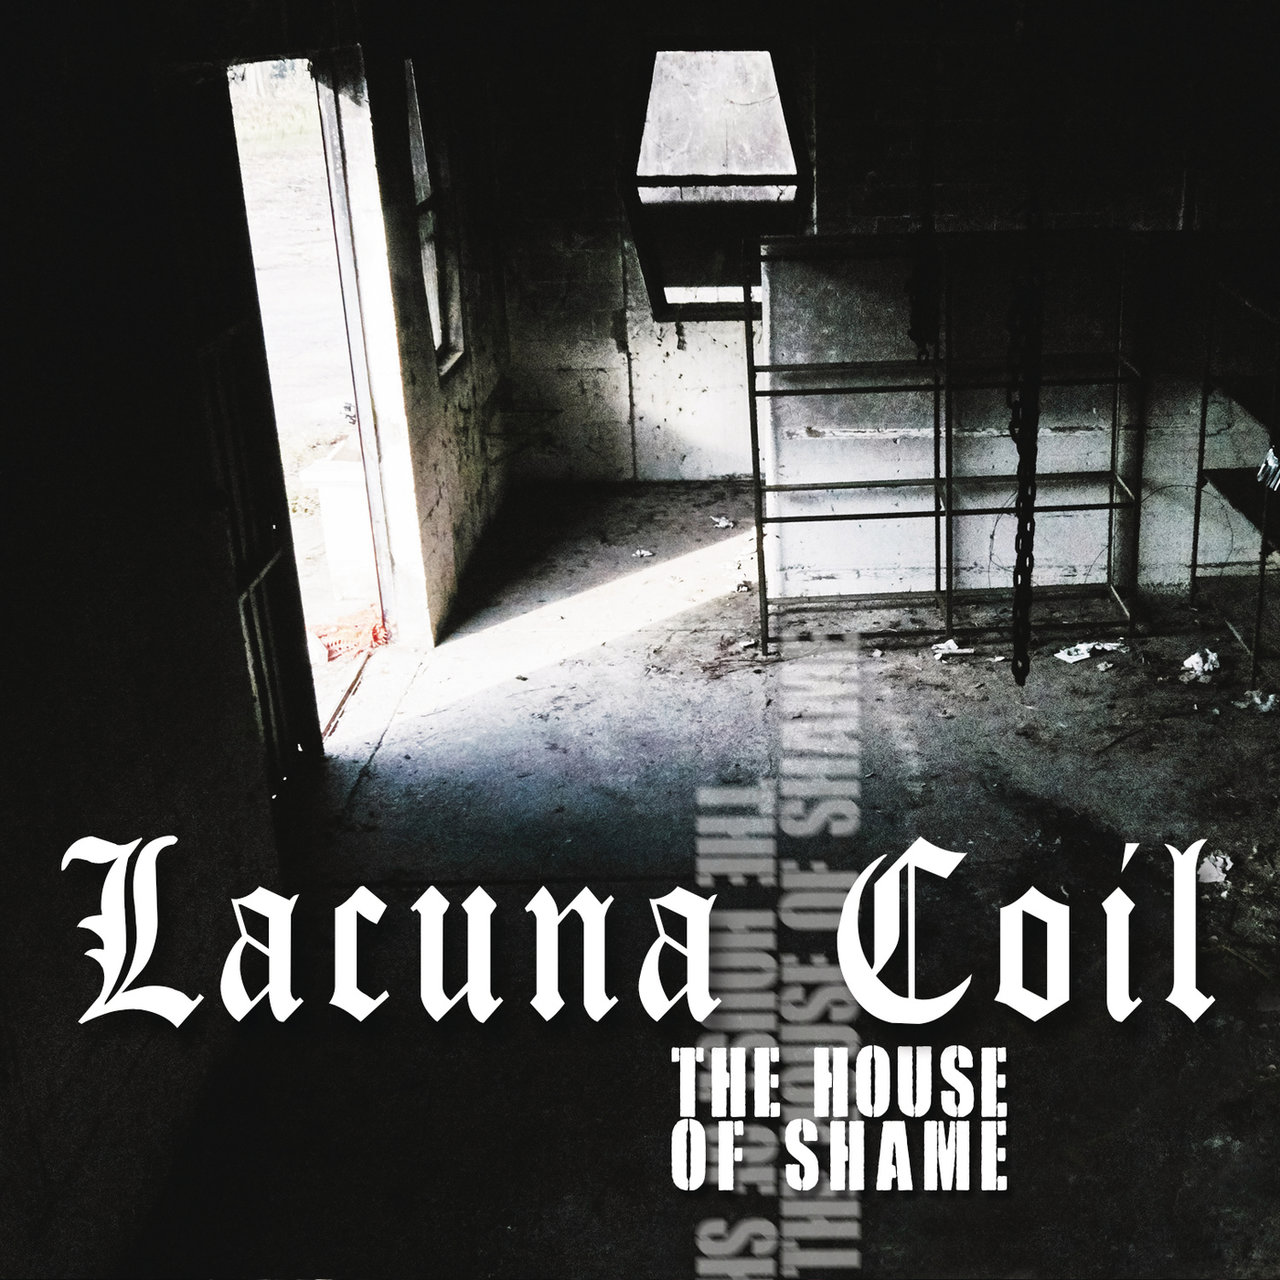 Lacuna coil shallow life rare